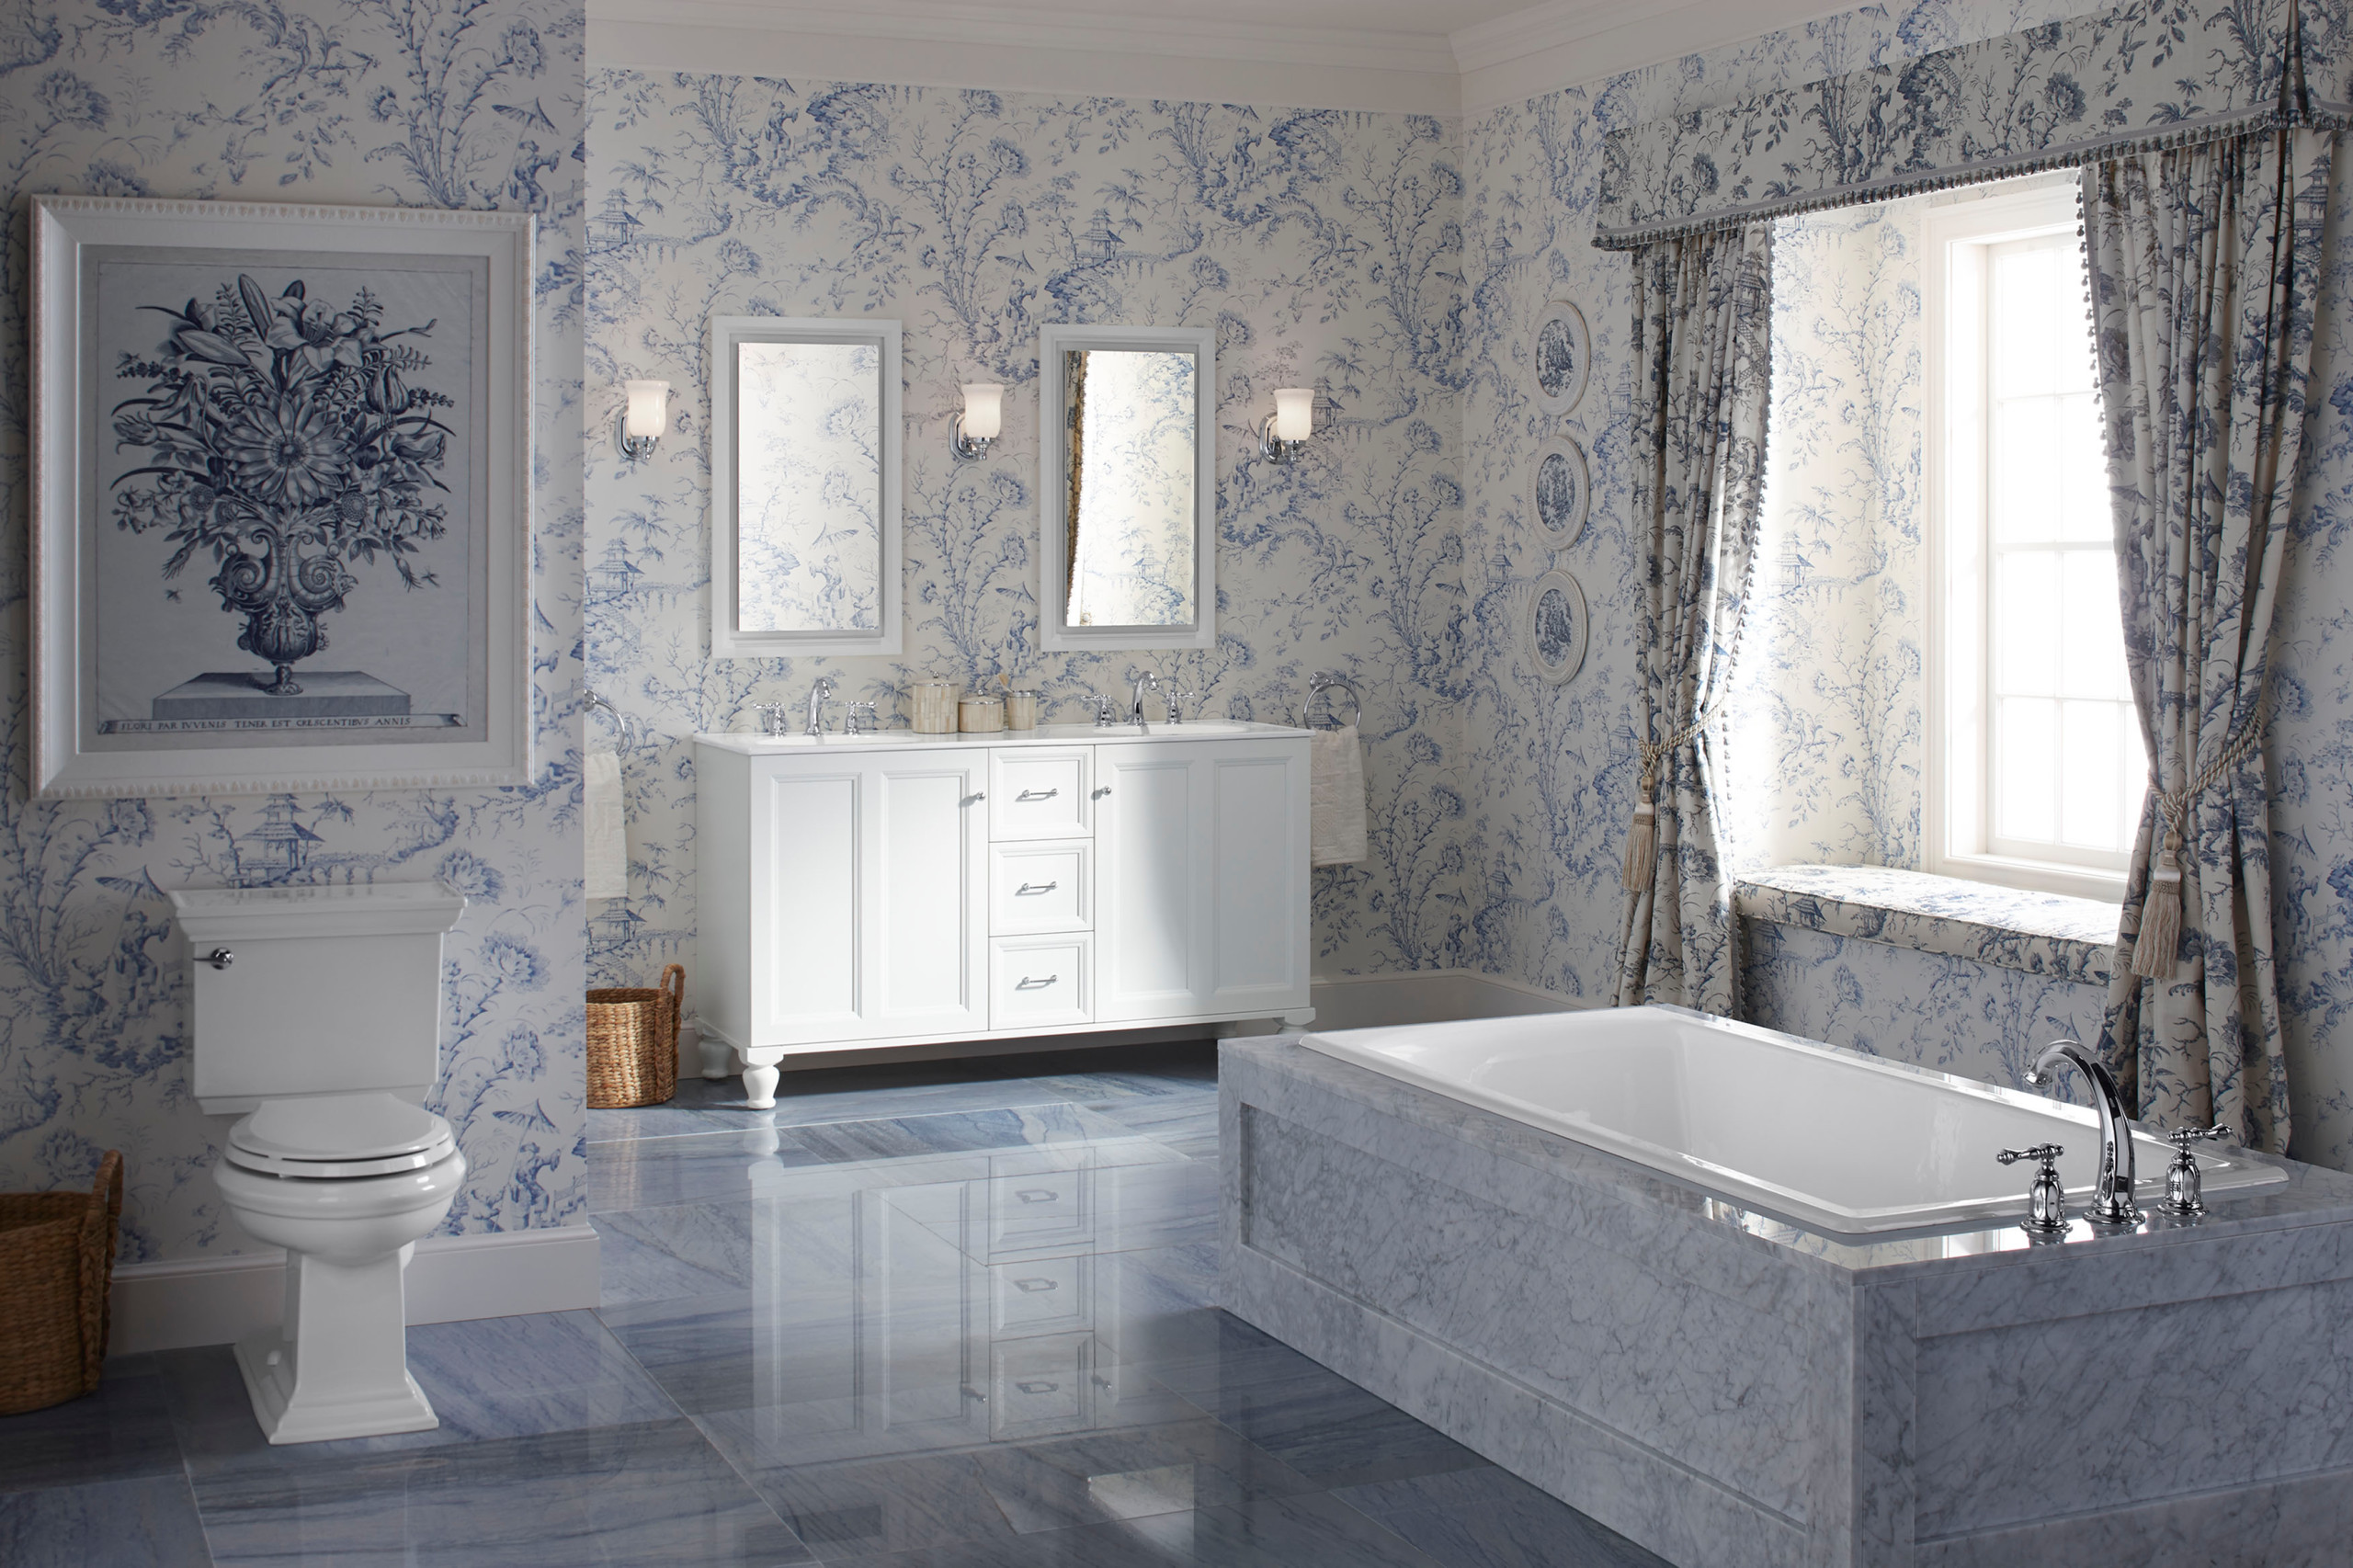 Delft Blue Bathroom - Traditional - Bathroom - Toronto - by Kohler Canada |  Houzz